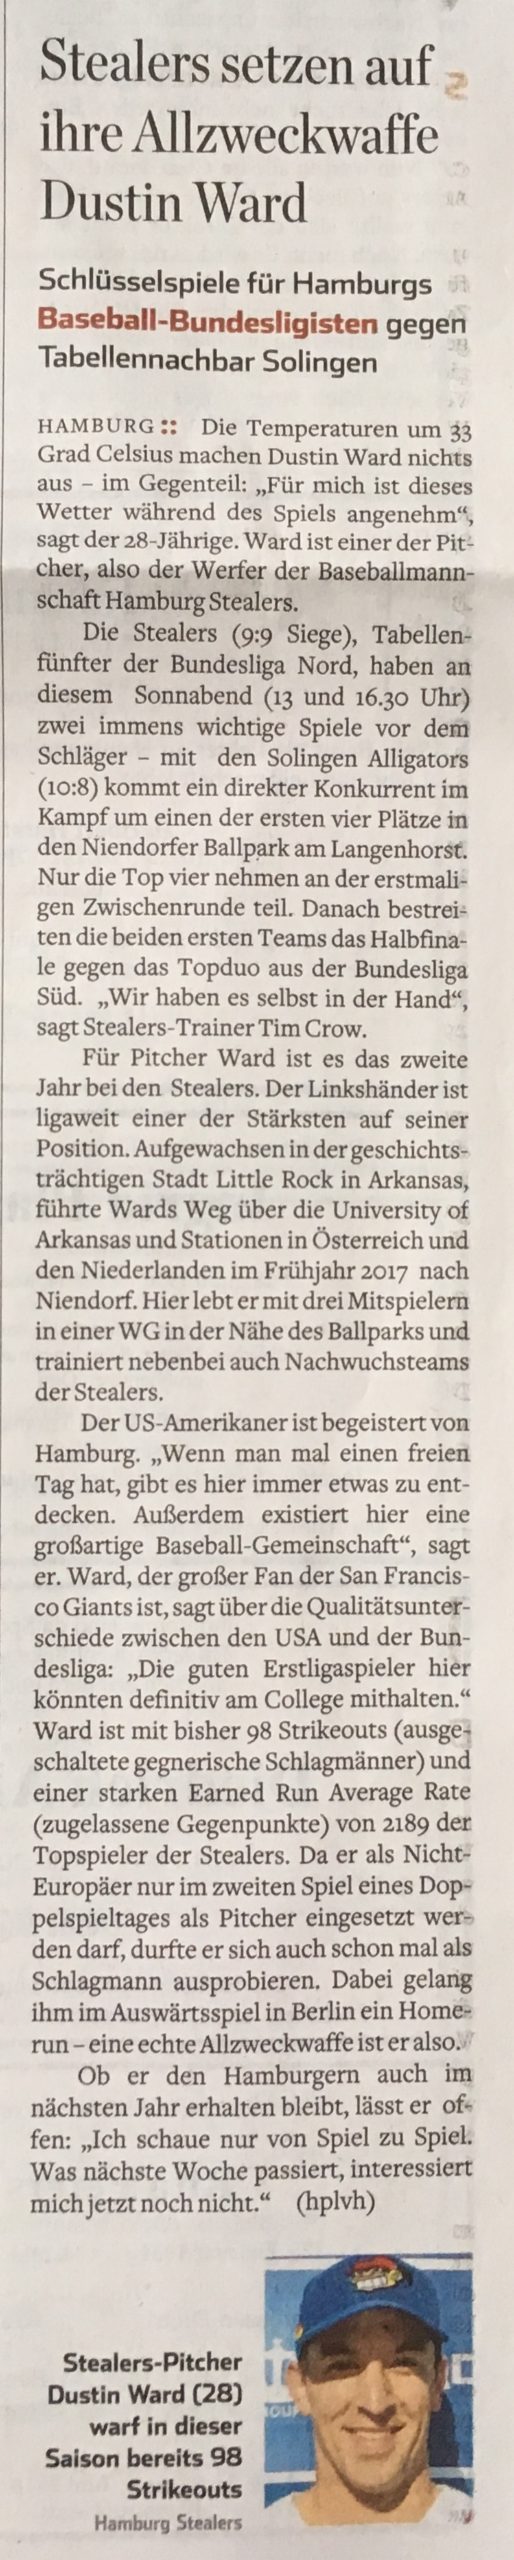 Hamburger Abendblatt, 2.6.2018